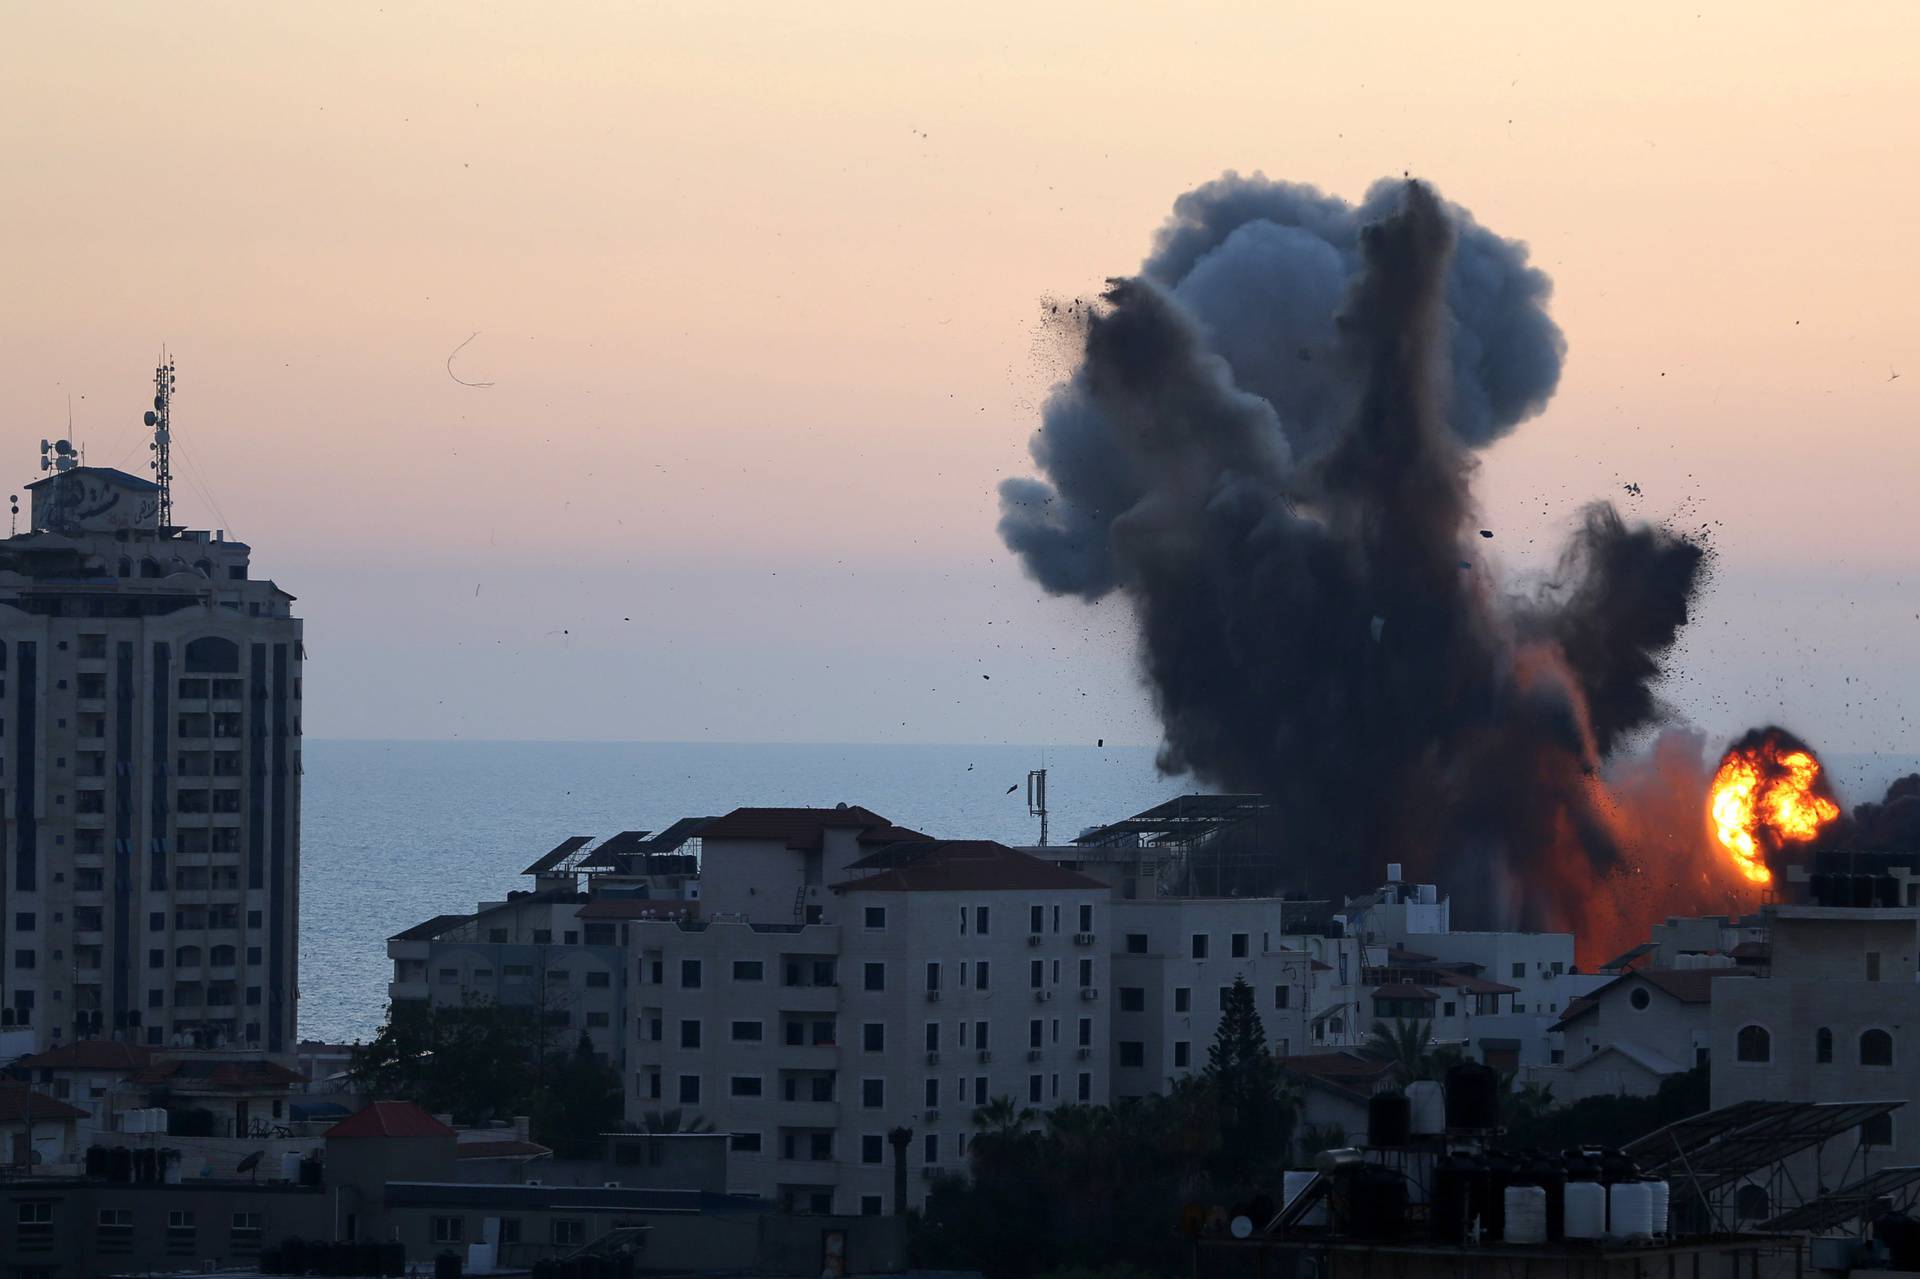 Gaza-Israel cross-border violence continues